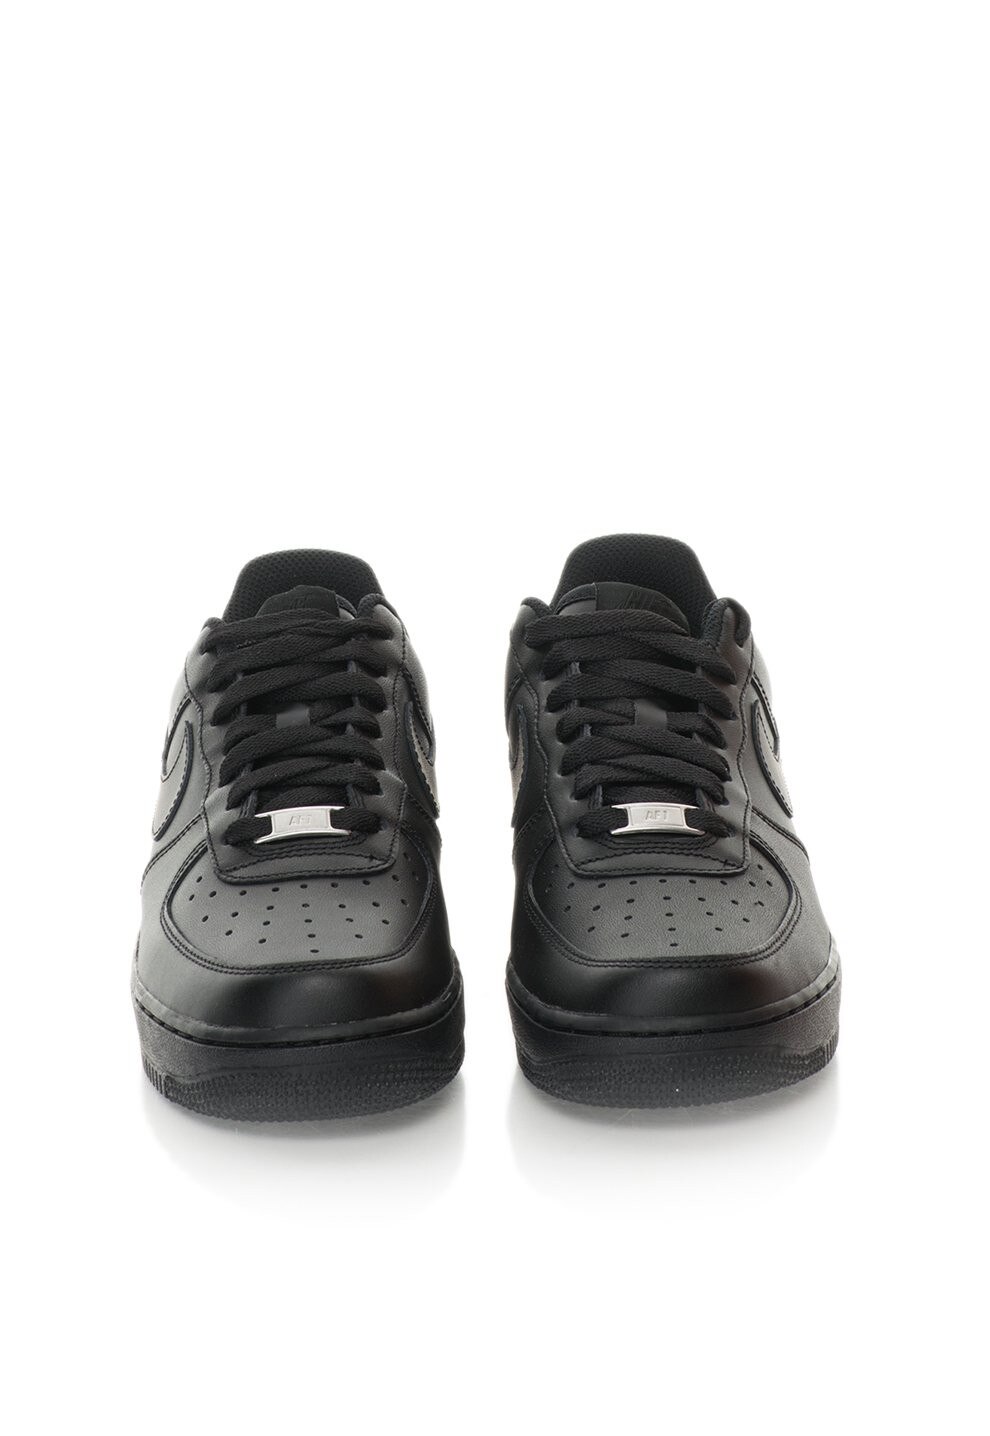 Pantofi sport negri de piele Force 1 Nike, 40, pentru barbati - eMAG.ro